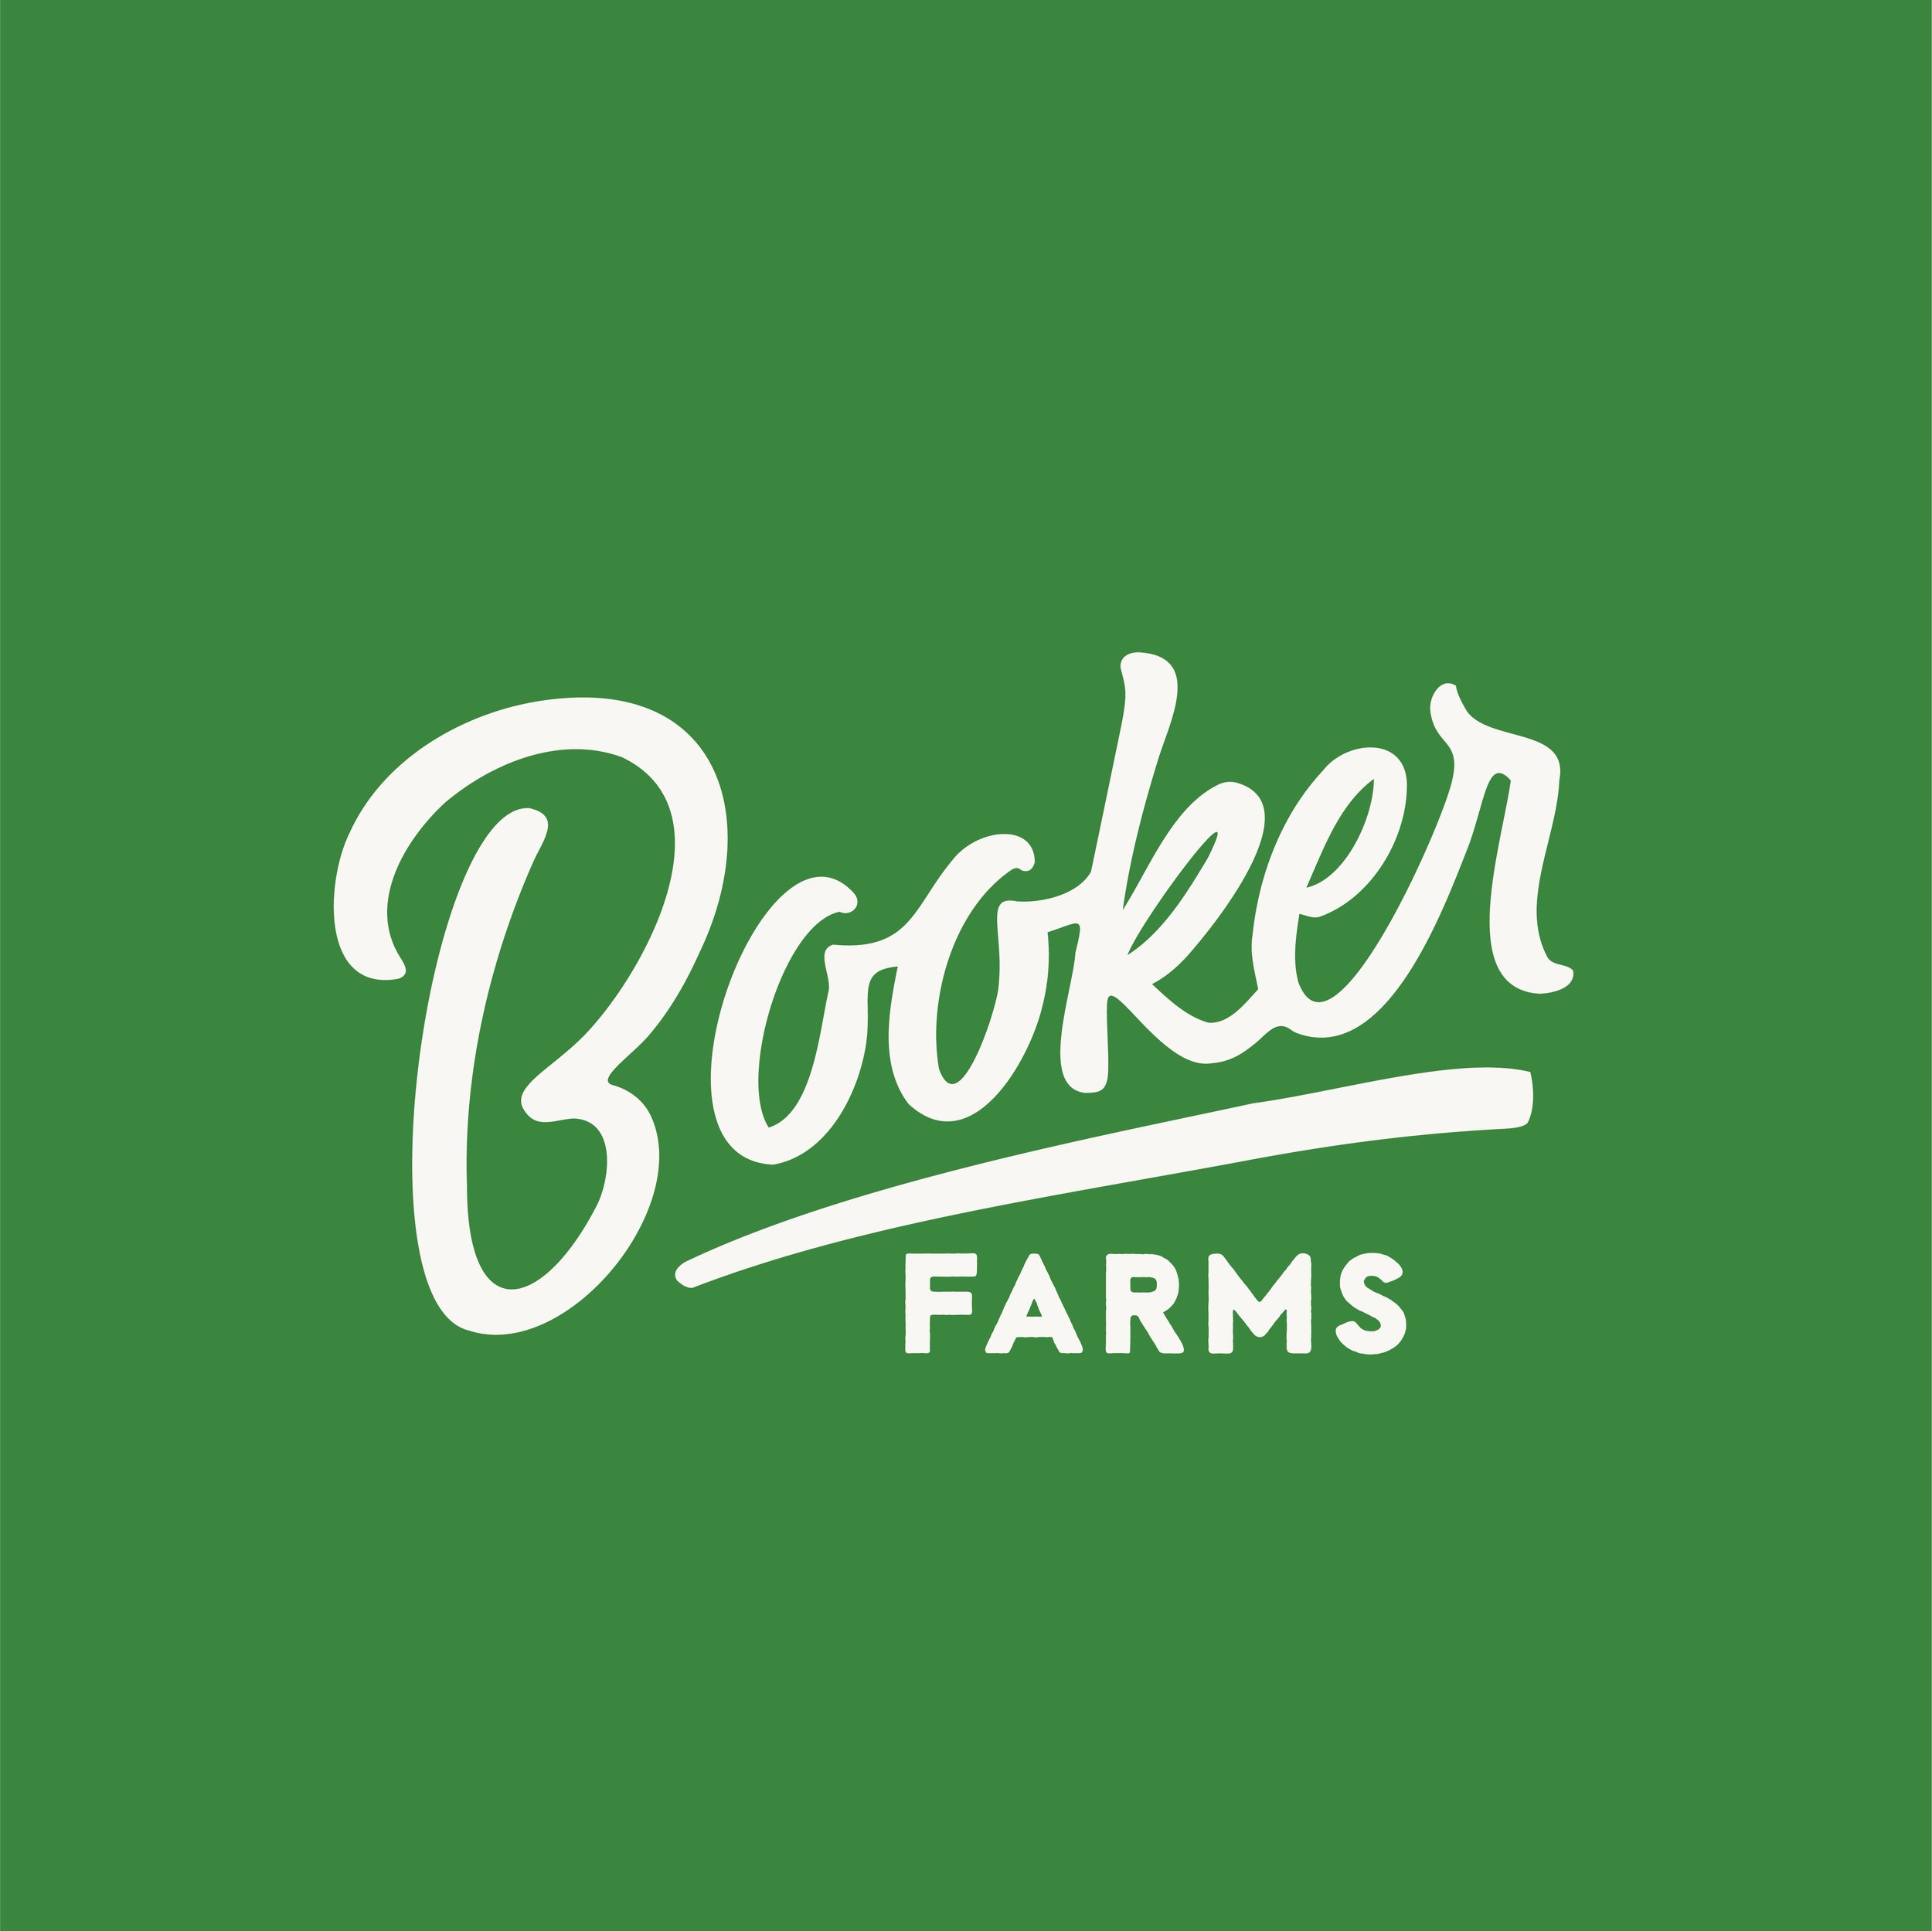 Booker Farms IG-02.jpg